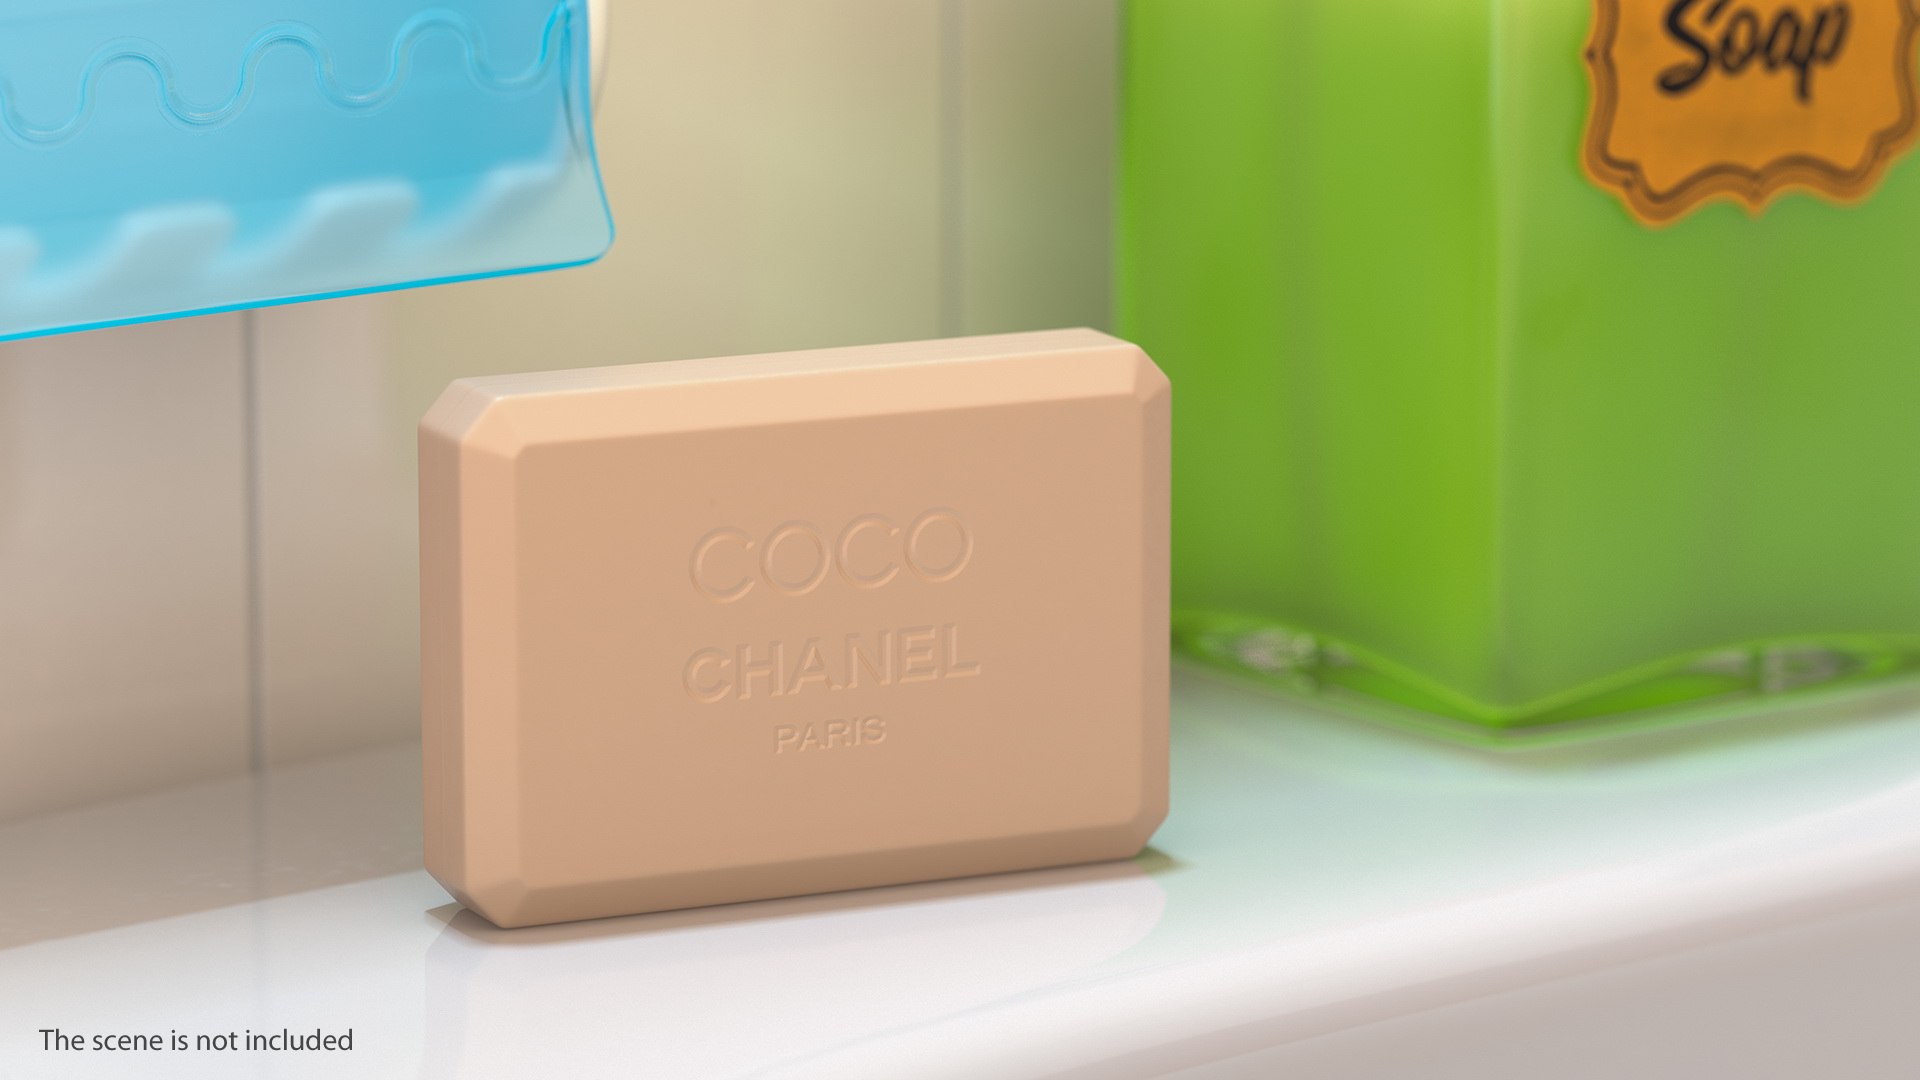 3D chanel fresh bath soap model - TurboSquid 1446331